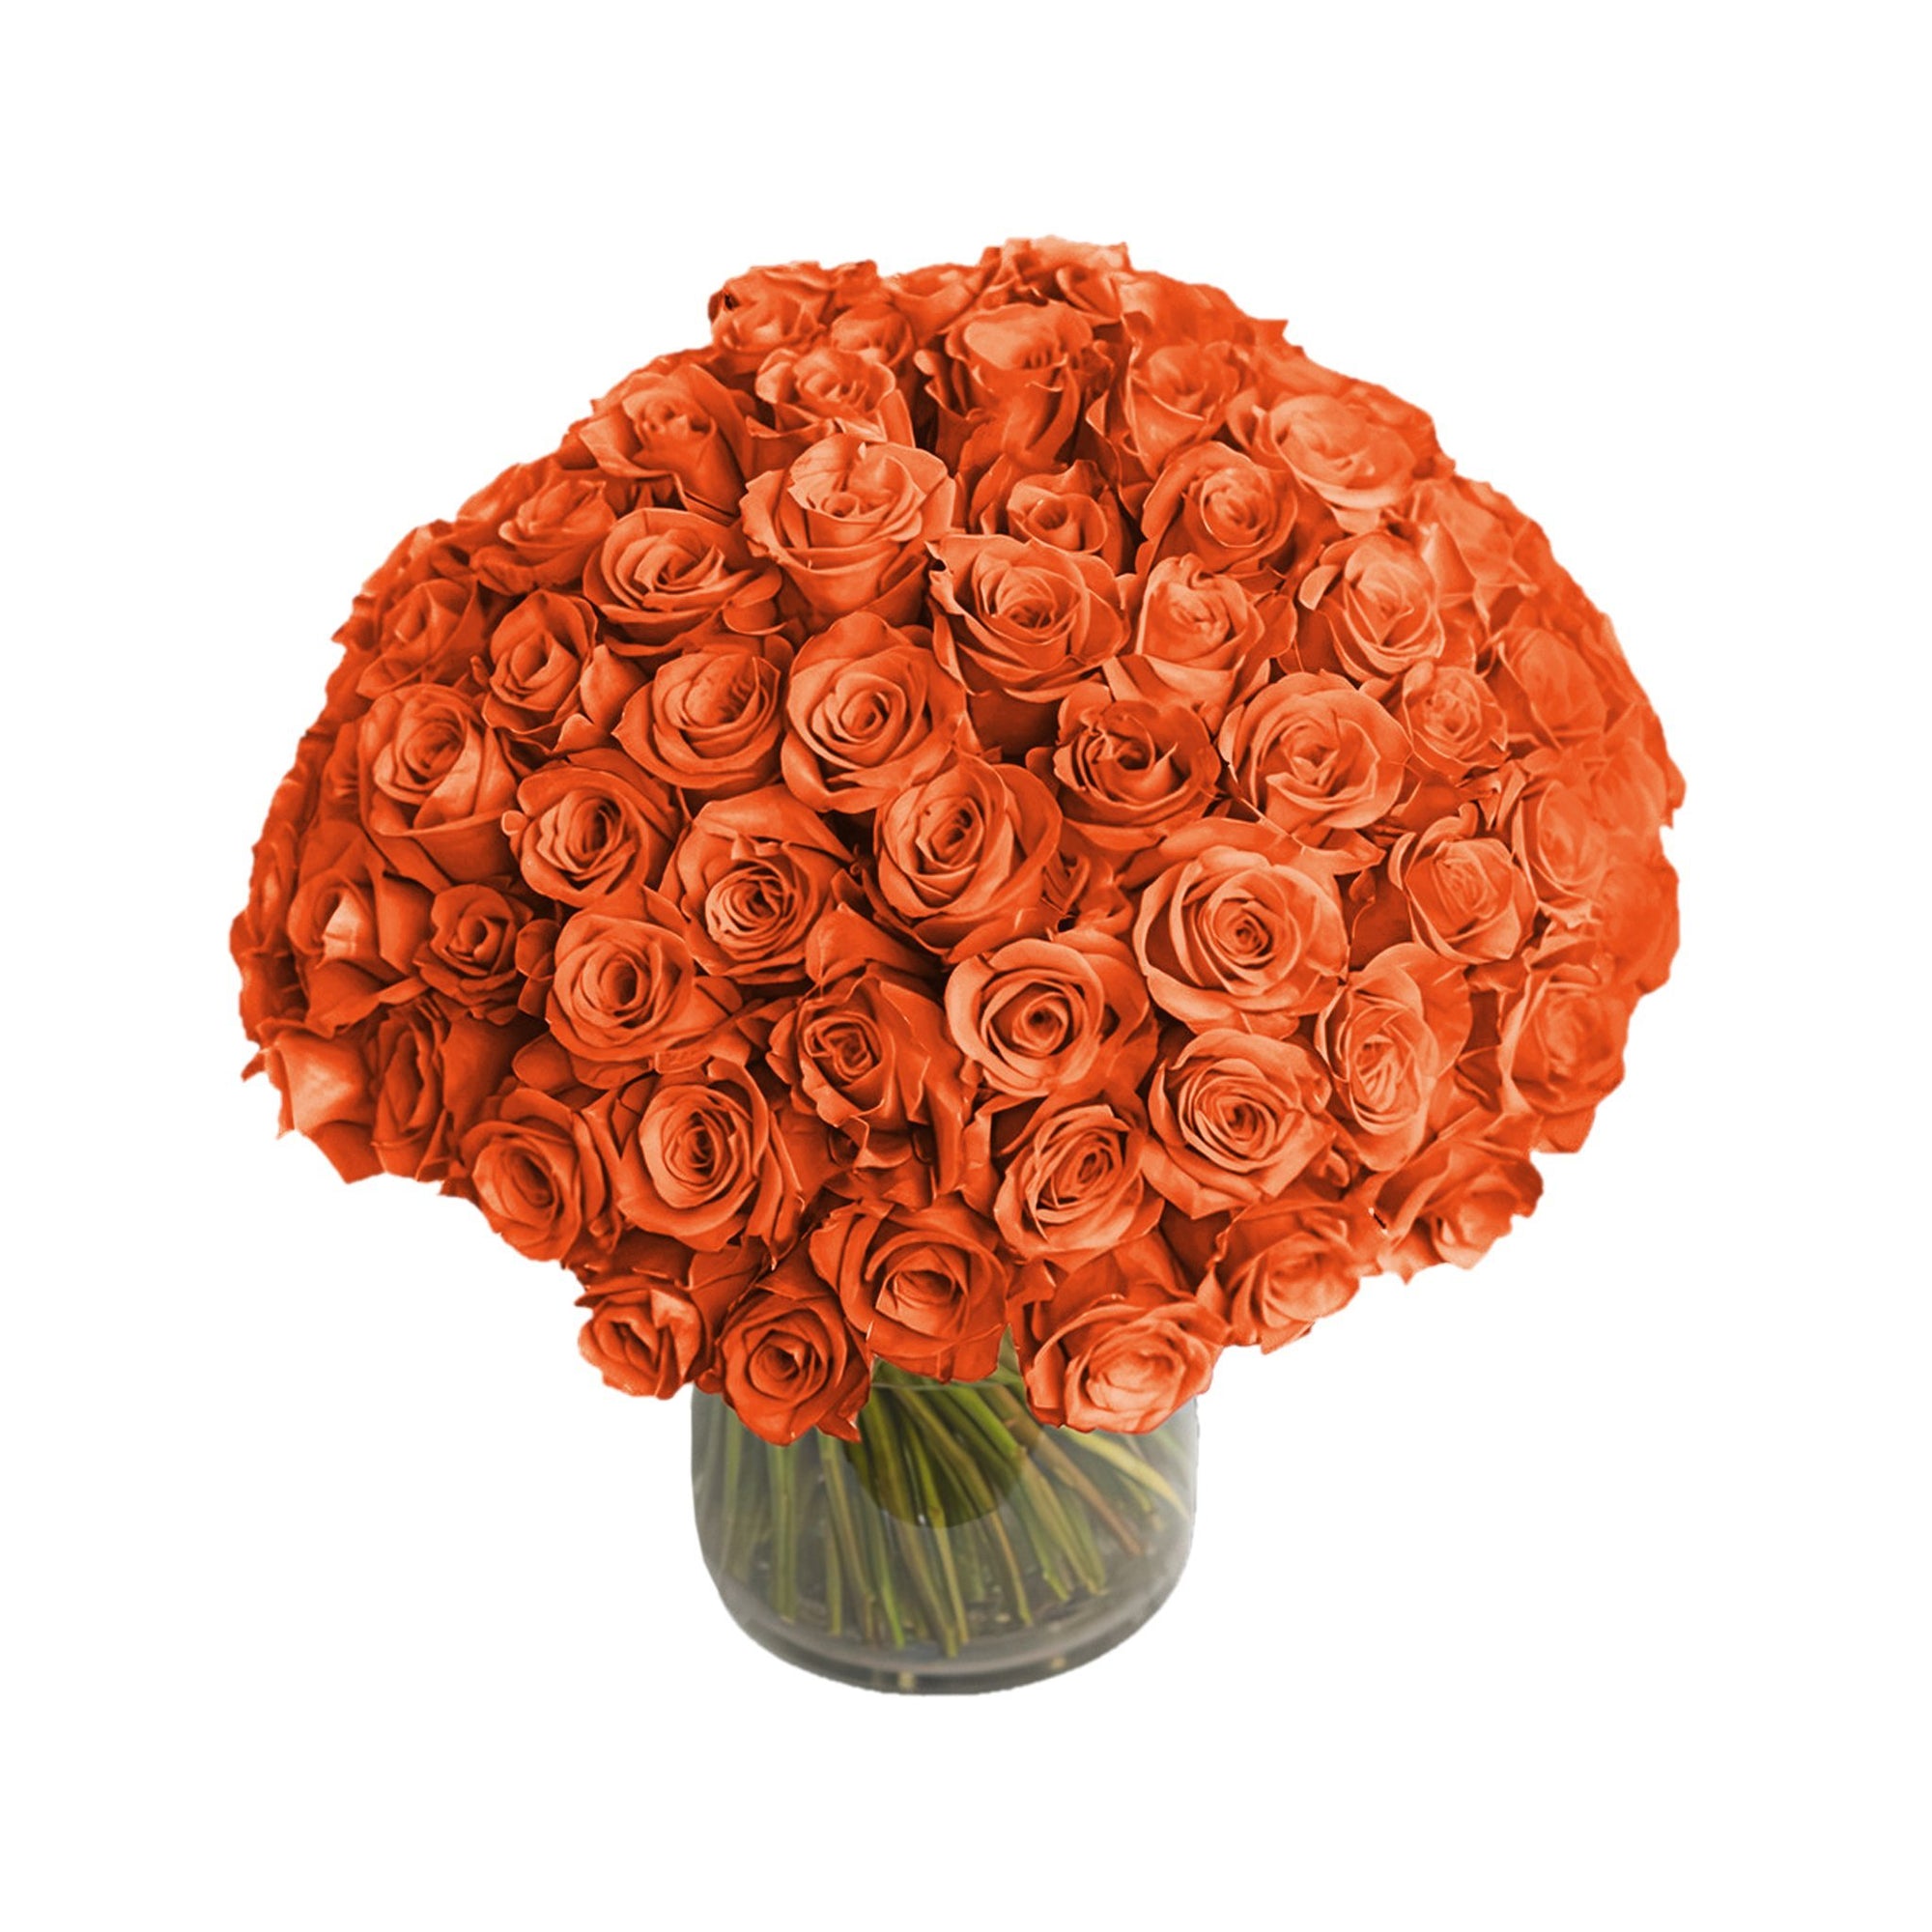 Manhattan Flower Delivery - Fresh Roses in a Vase | 100 Orange Roses - Roses